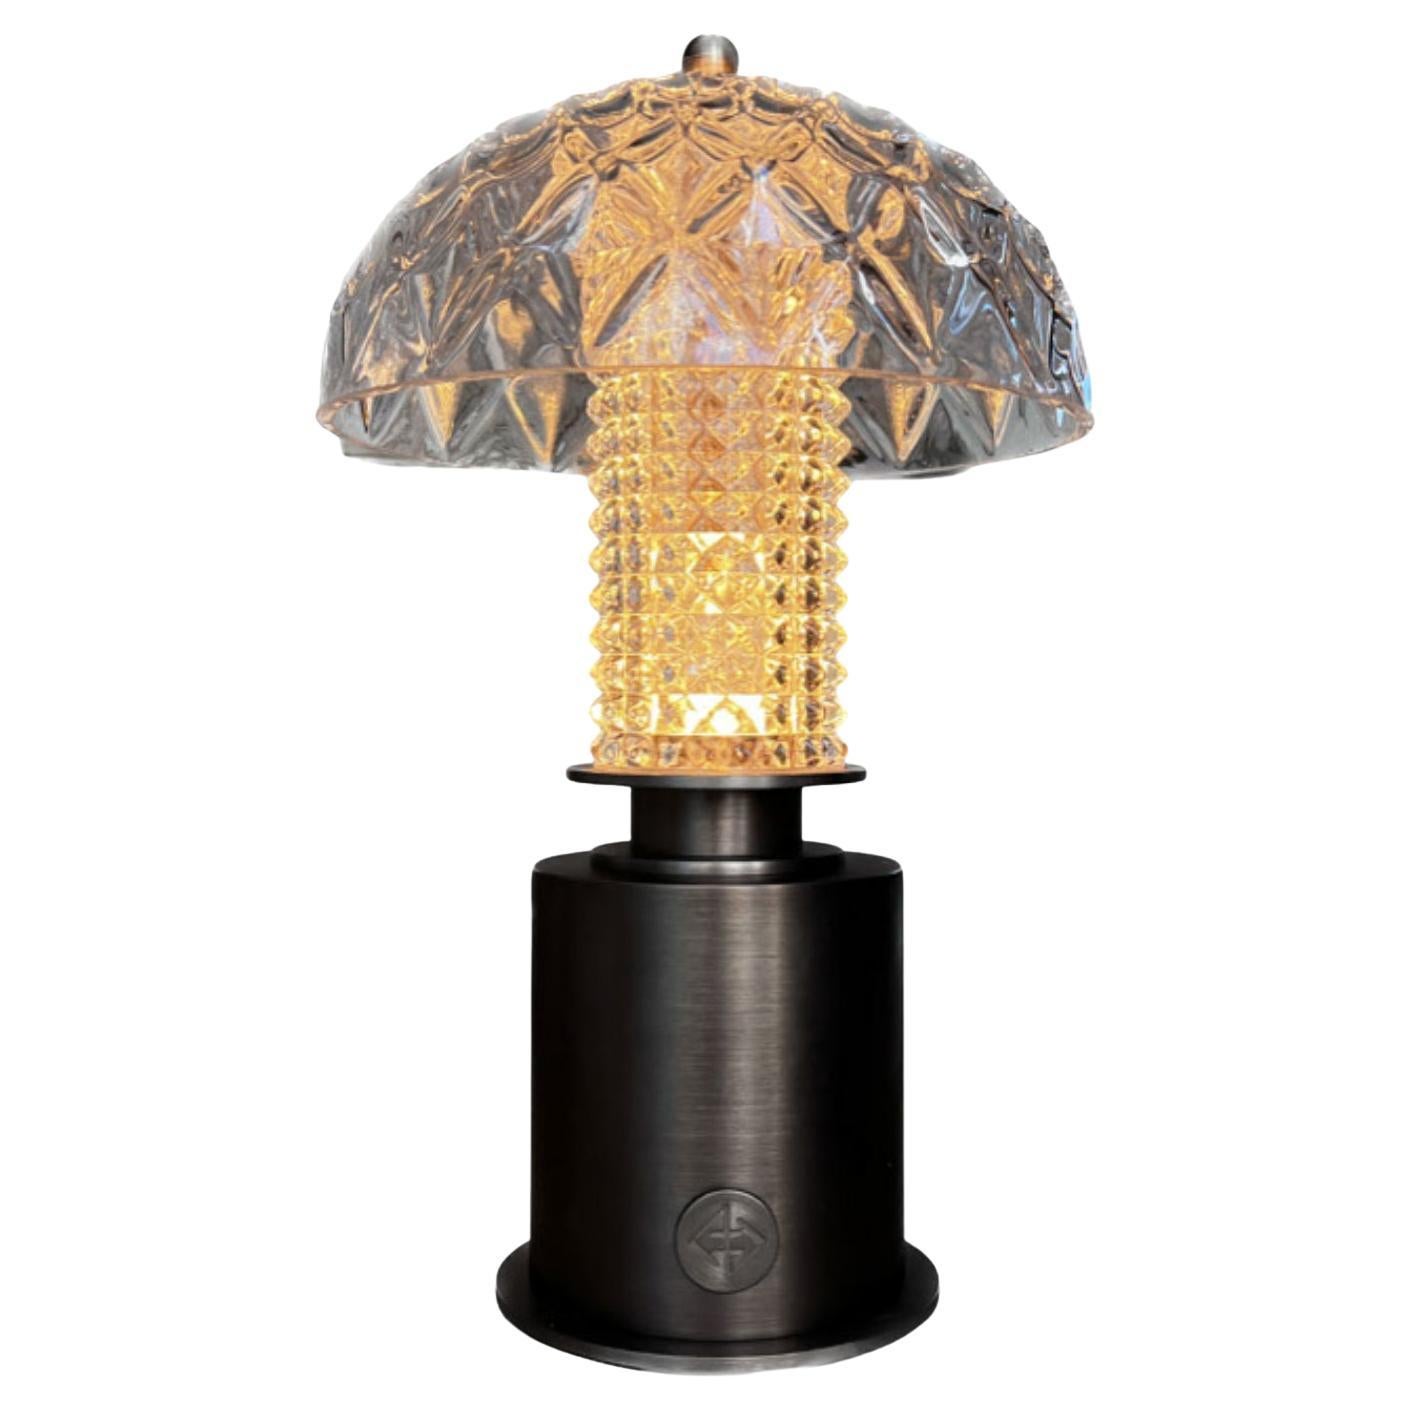 The Crystelle Tragbare LED-Lampe aus Glas und Bronze von André Fu Living